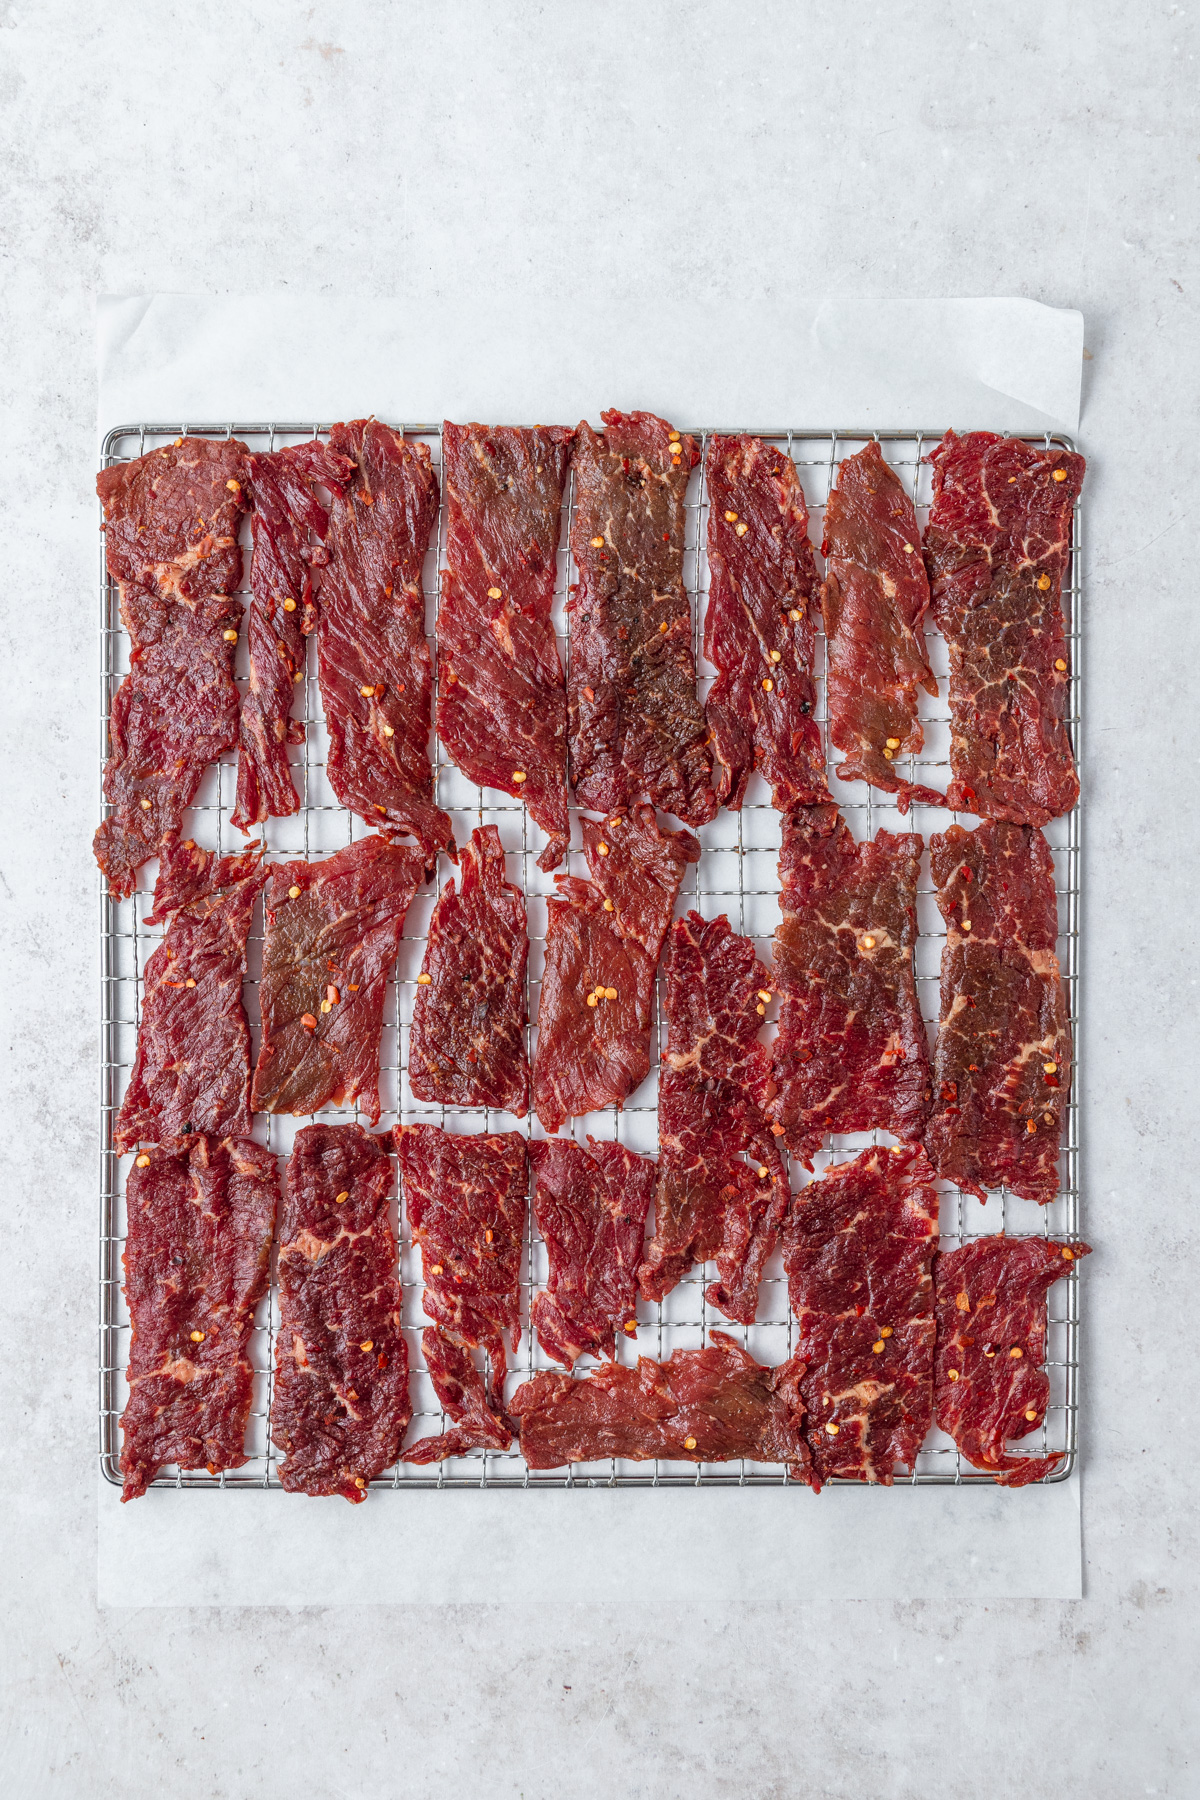 beef strips on dehydrator rack before drying.